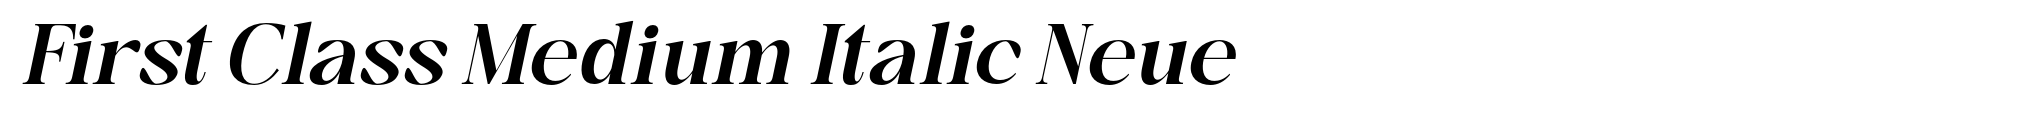 First Class Medium Italic Neue image